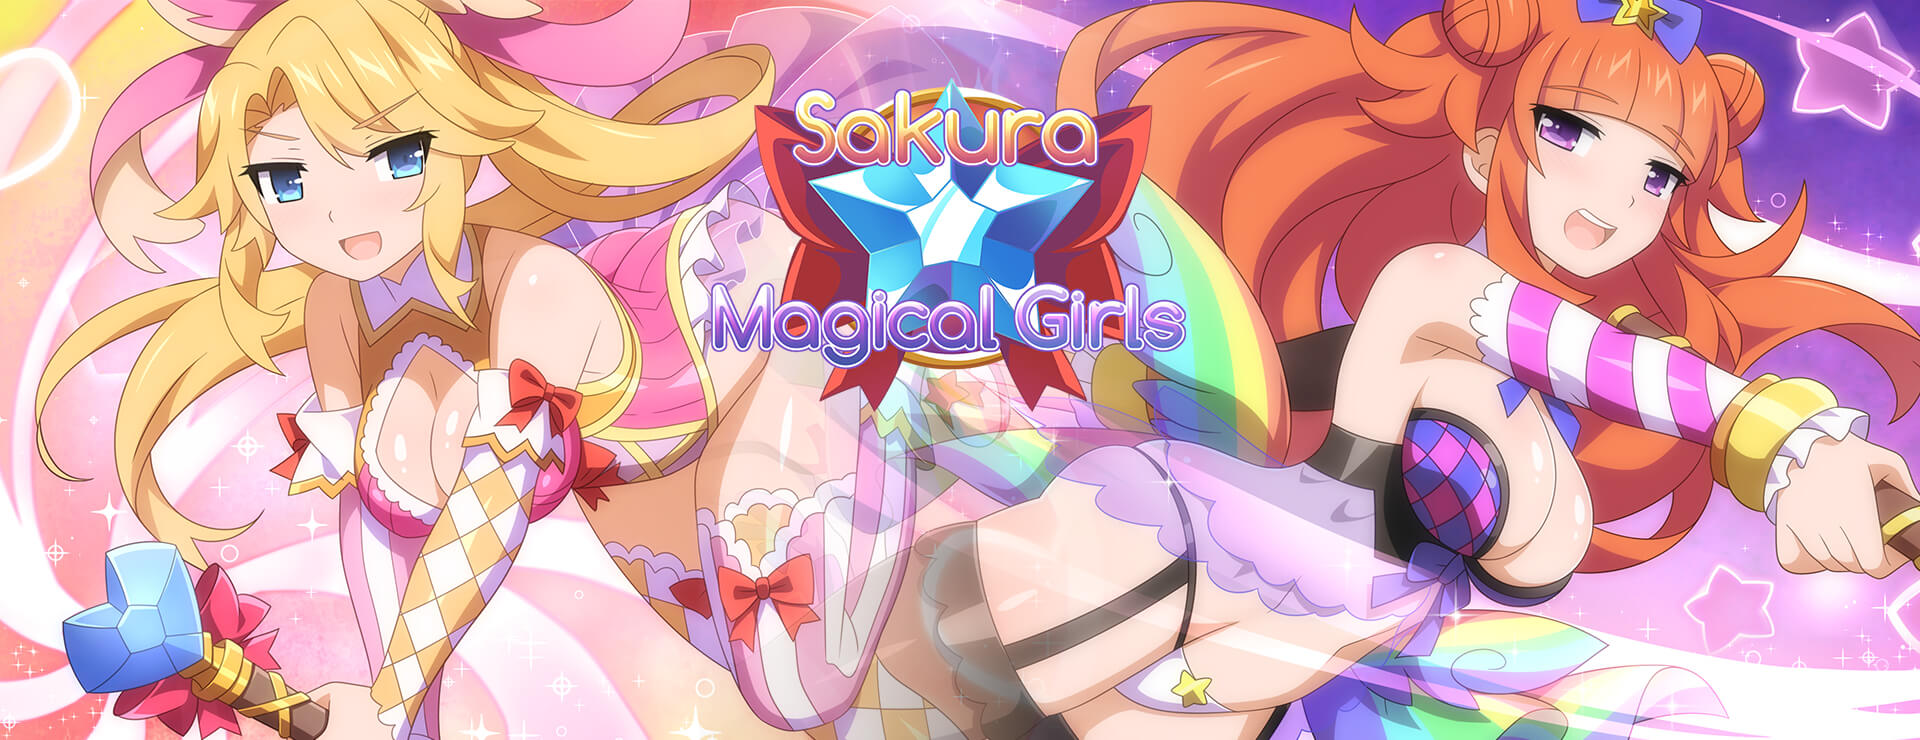 Sakura Magical Girls - Visual Novel Game